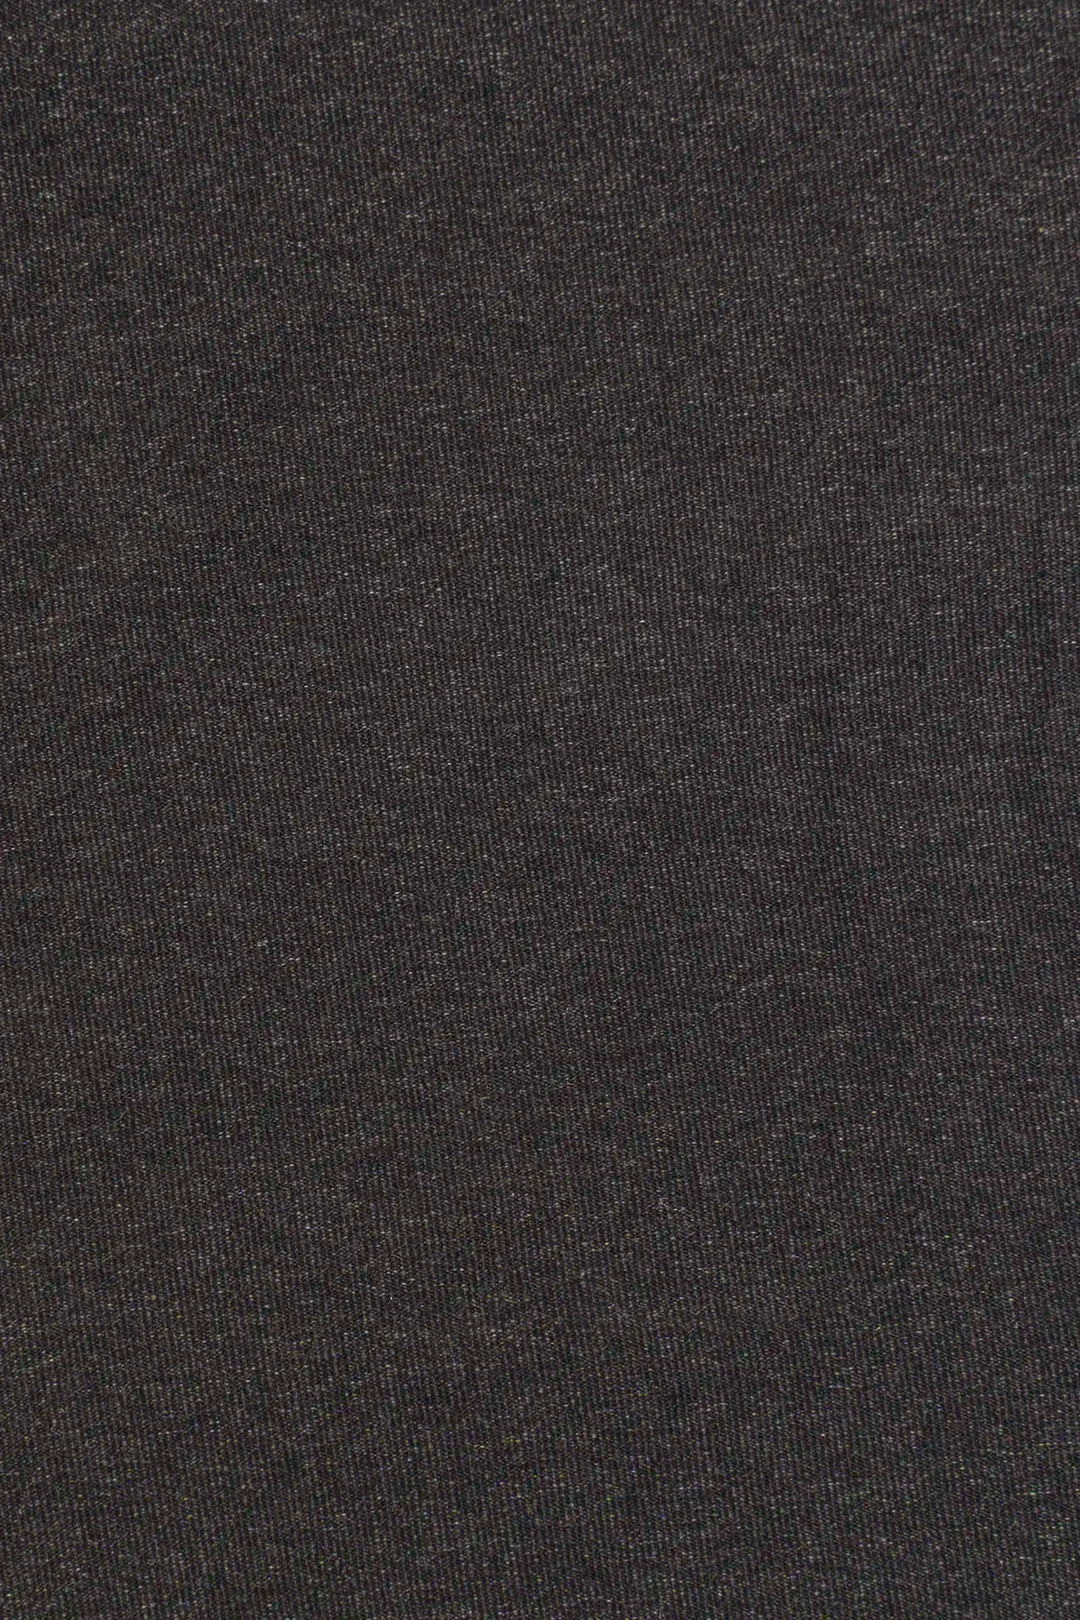 Dark Grey Charcoal Nylon Spandex Stretch Fabric